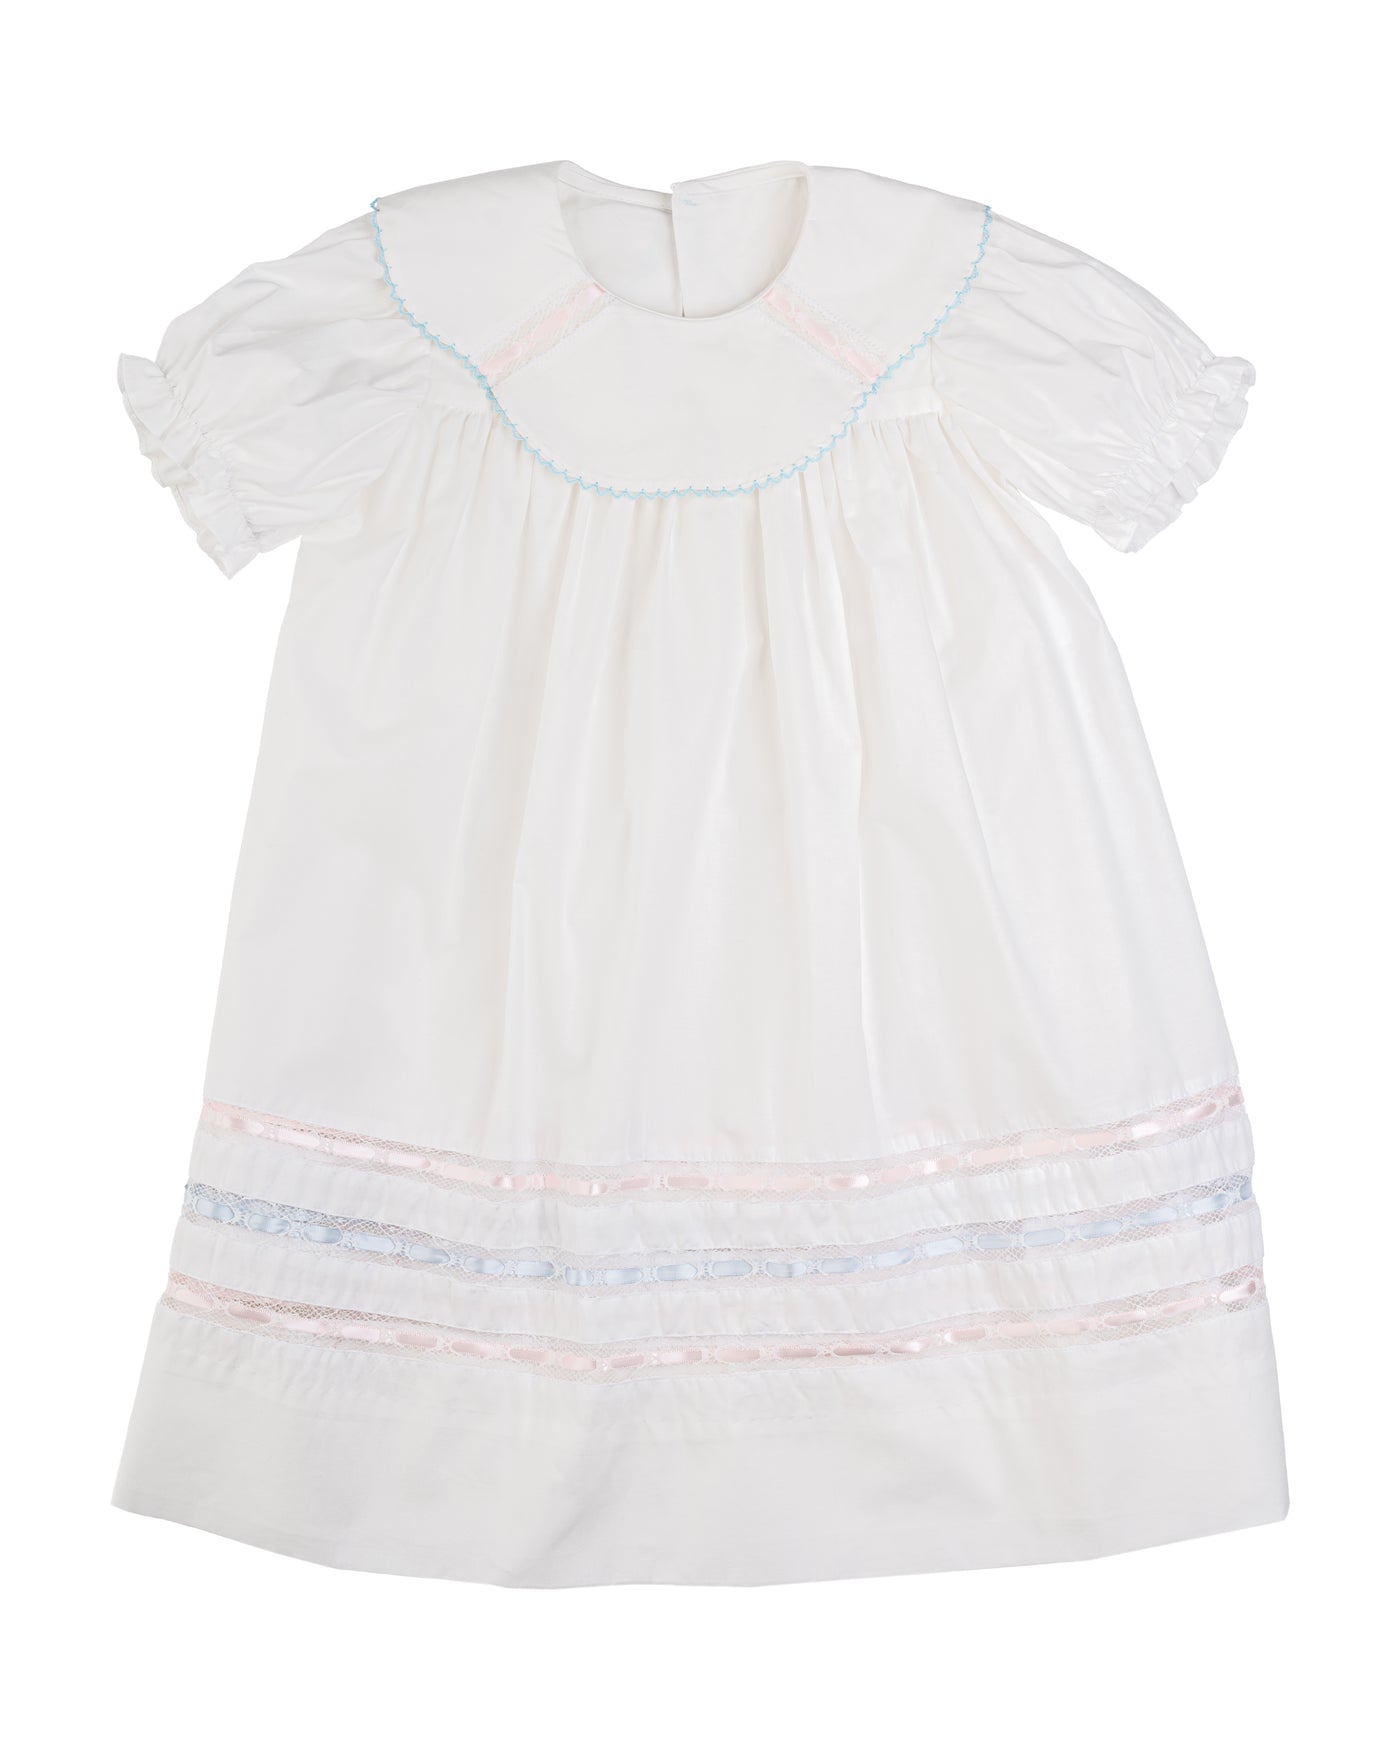 Donahue Dress - Blessings White Batiste, Blue, Pink